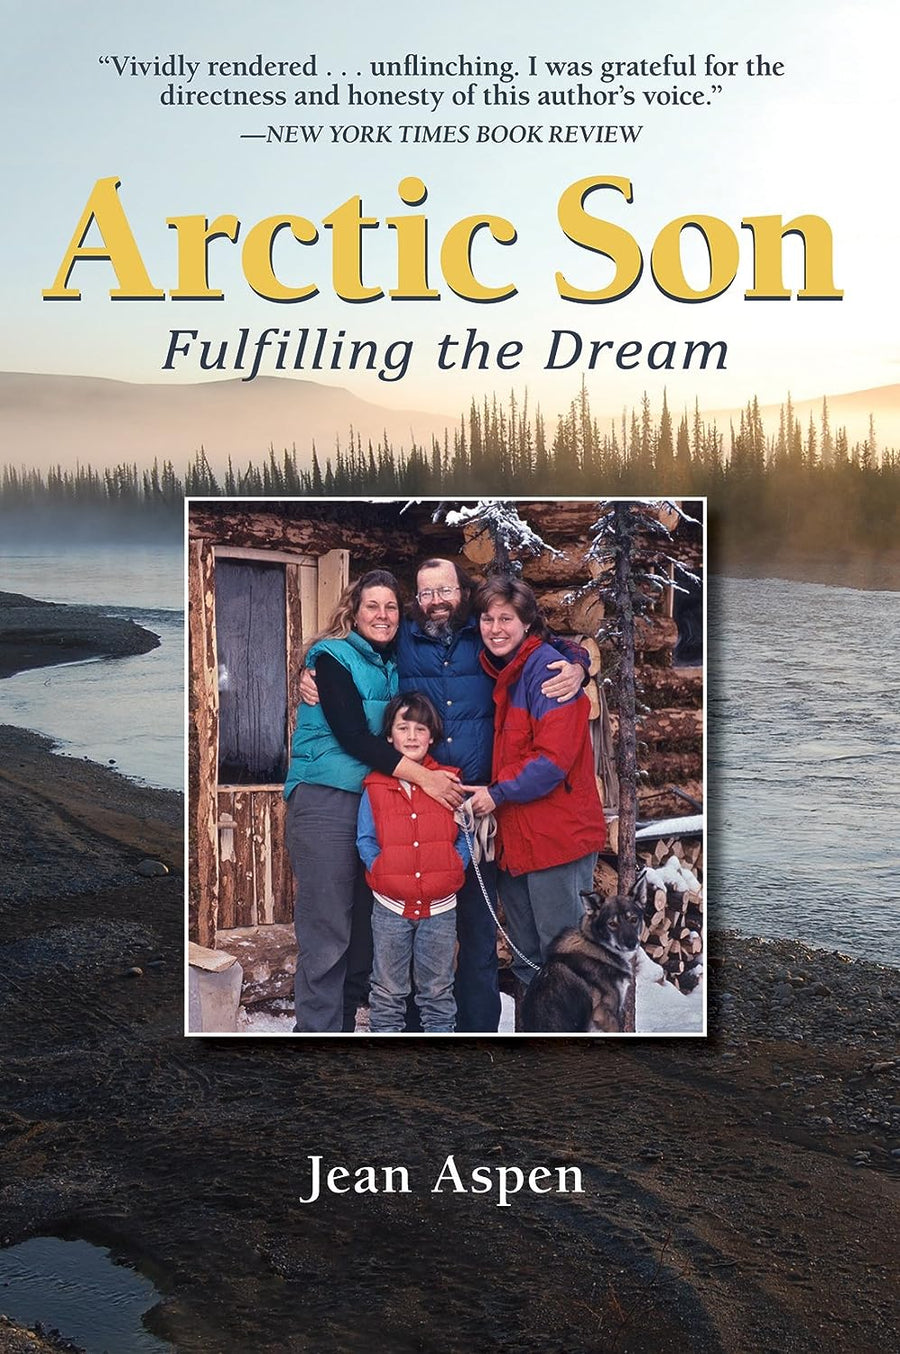 Arctic Son: Fulfilling the Dream by Jean Aspen